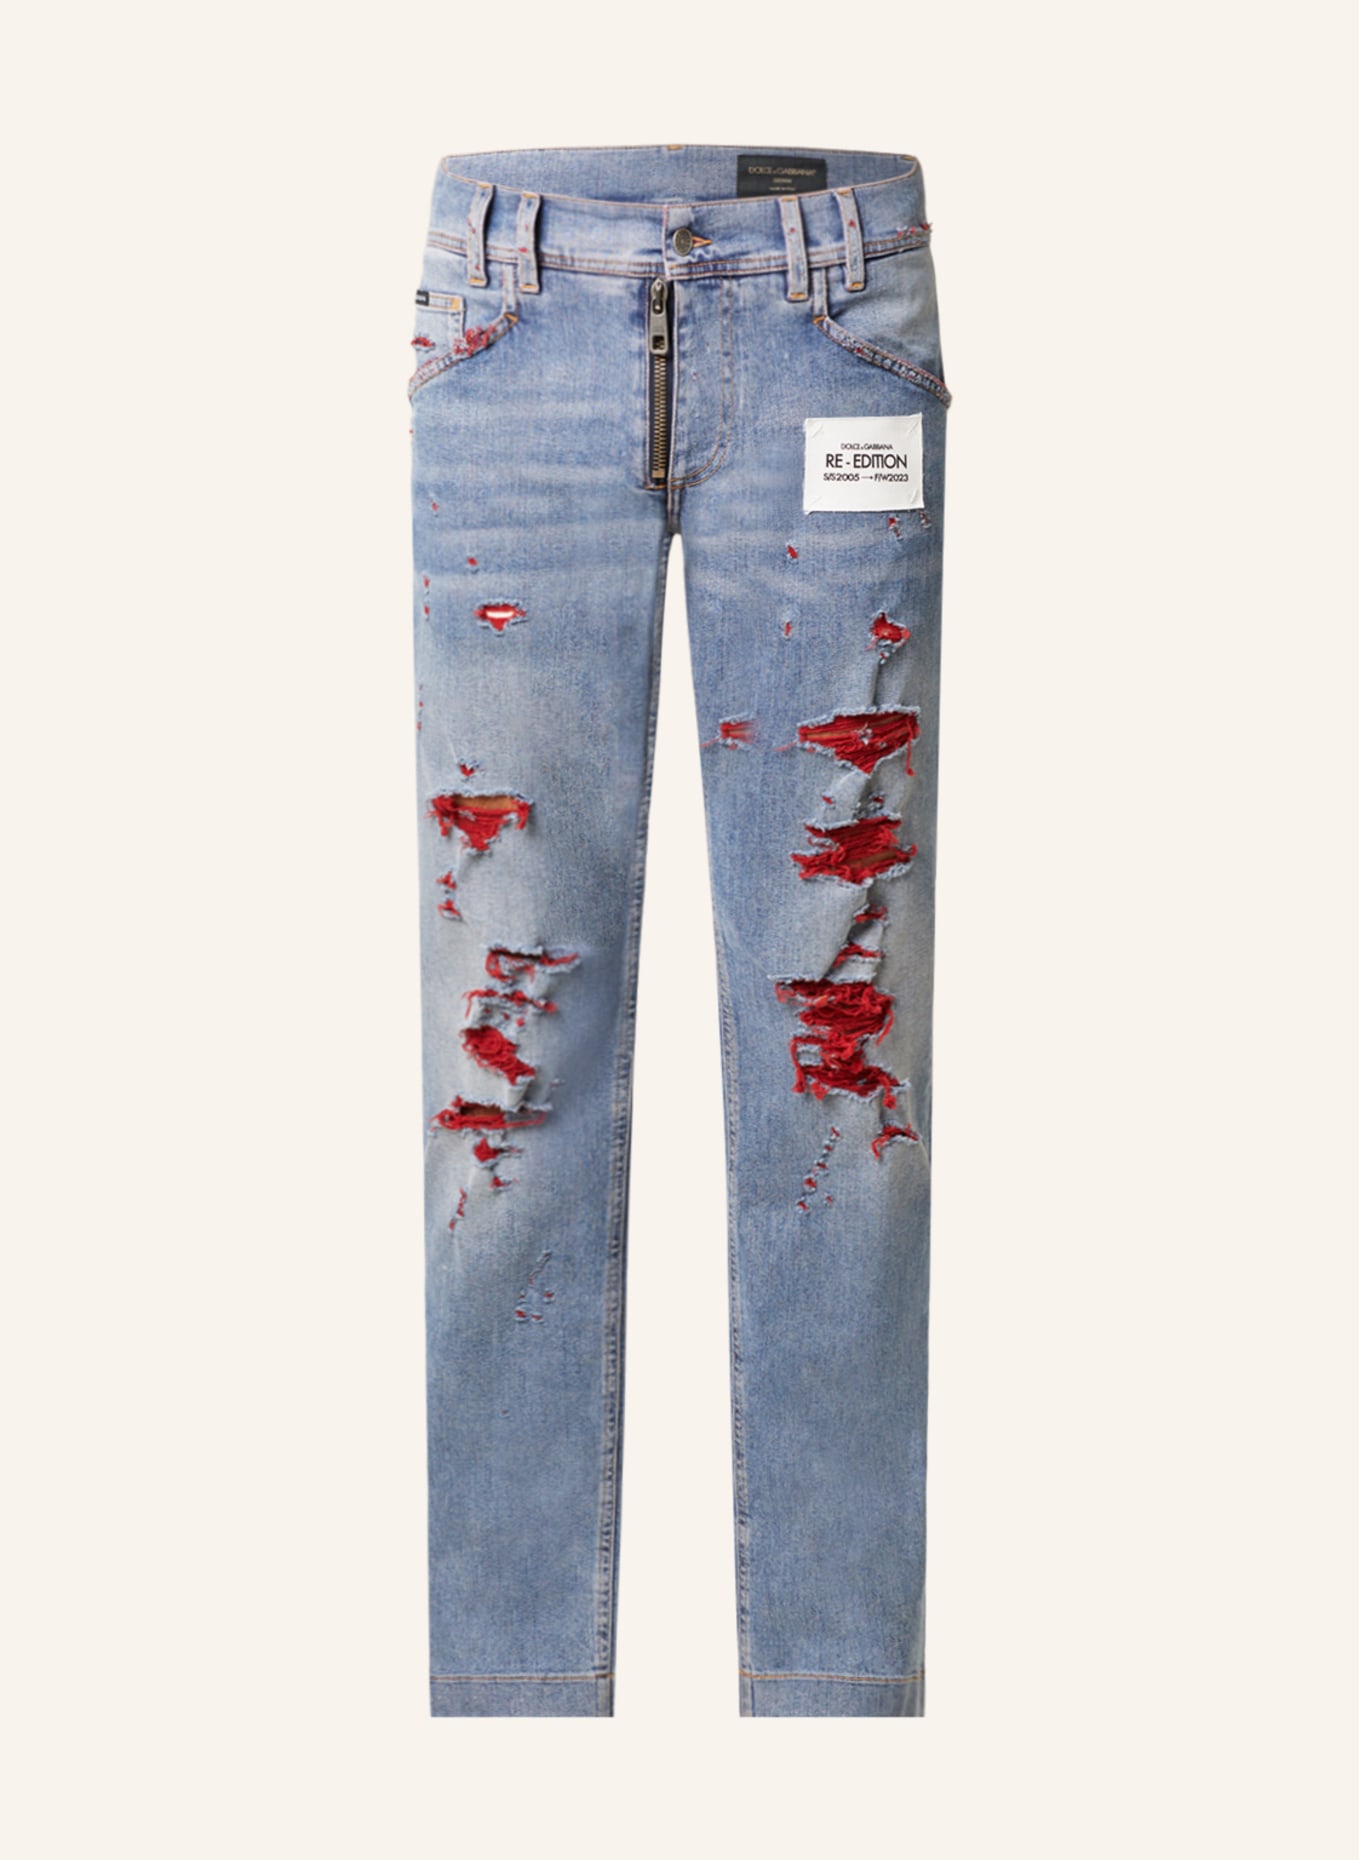 DOLCE & GABBANA Destroyed jeans regular fit, Color: S9001 VARIANTE ABBINATA (Image 1)